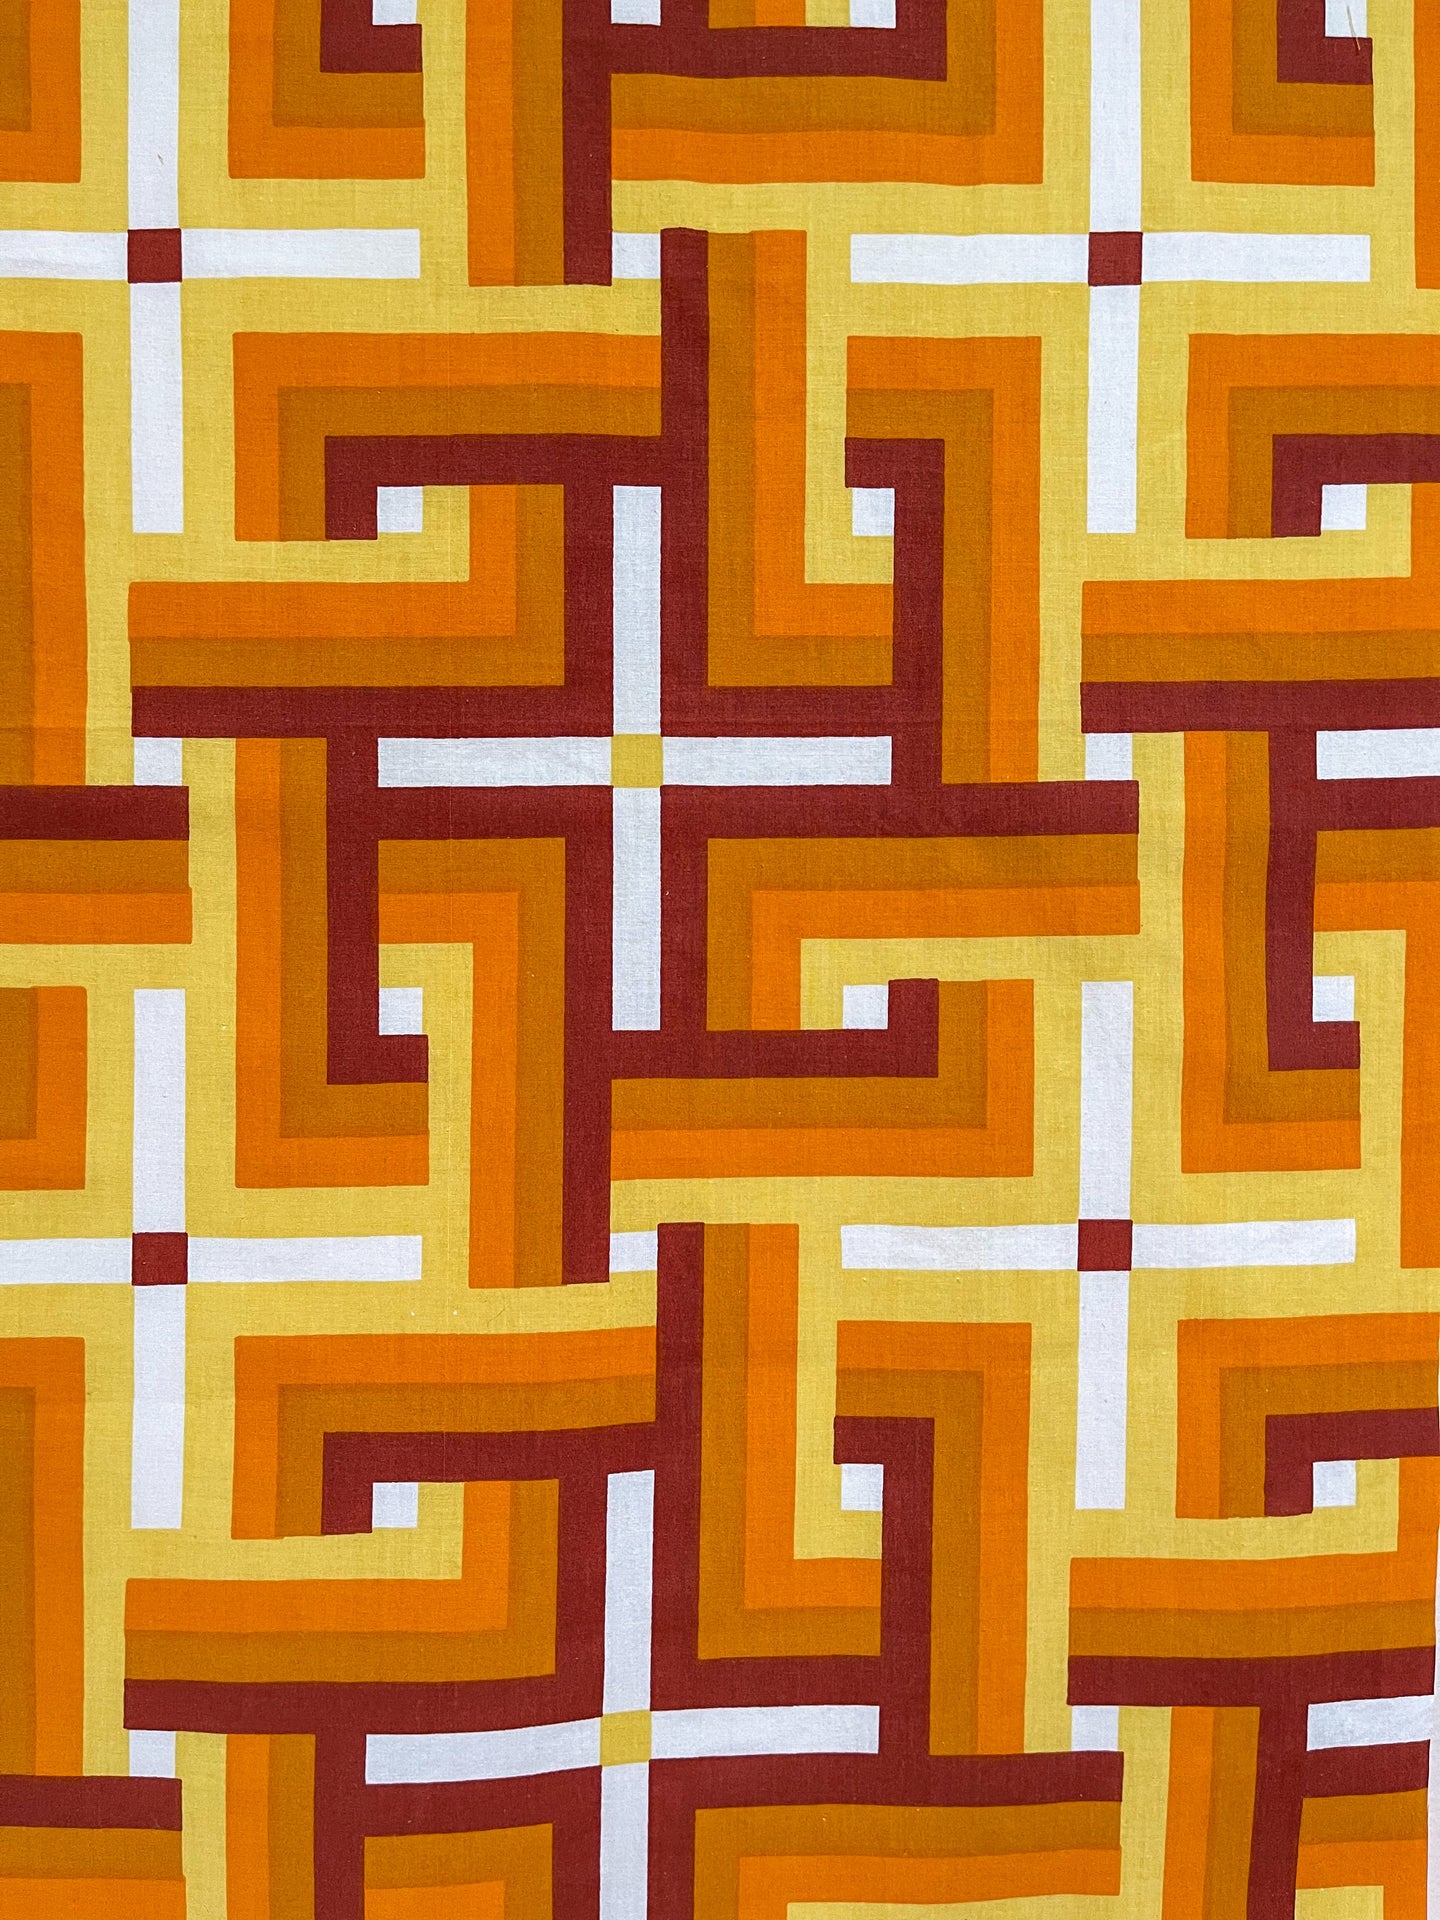 Geometric 1970s Vintage Fabric Panel Art